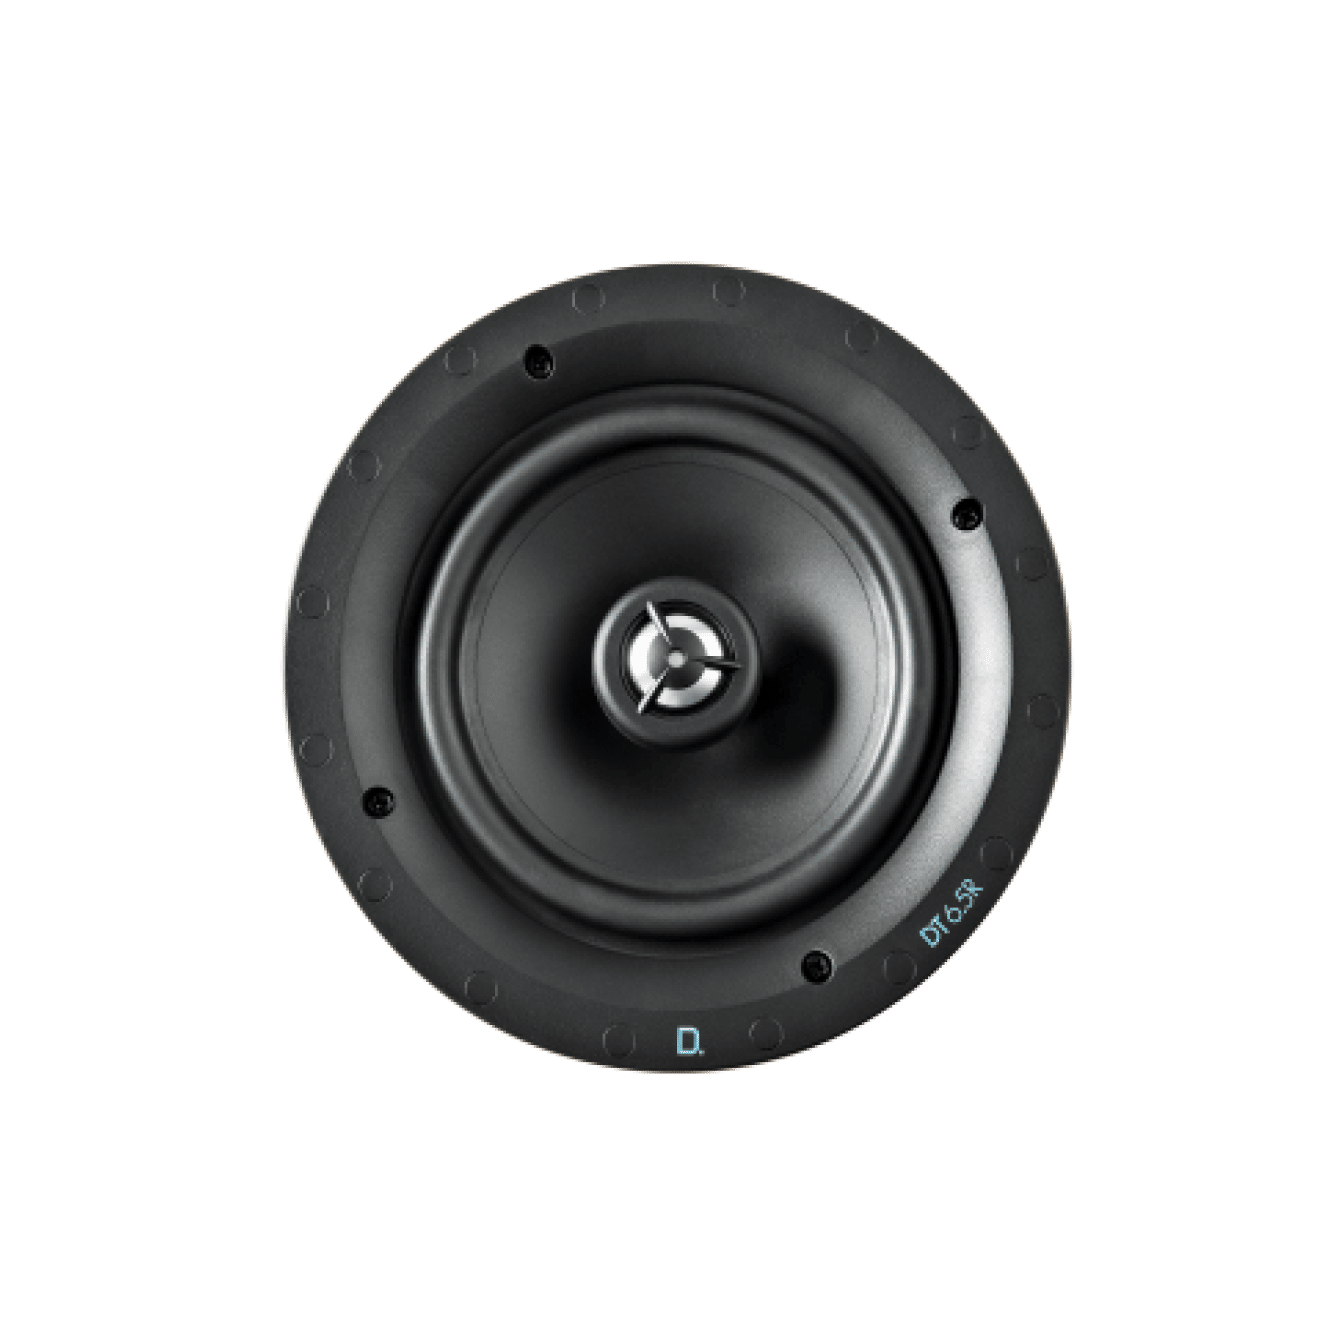 Definitive Technology DT 6.5R Round In-Ceiling Speaker